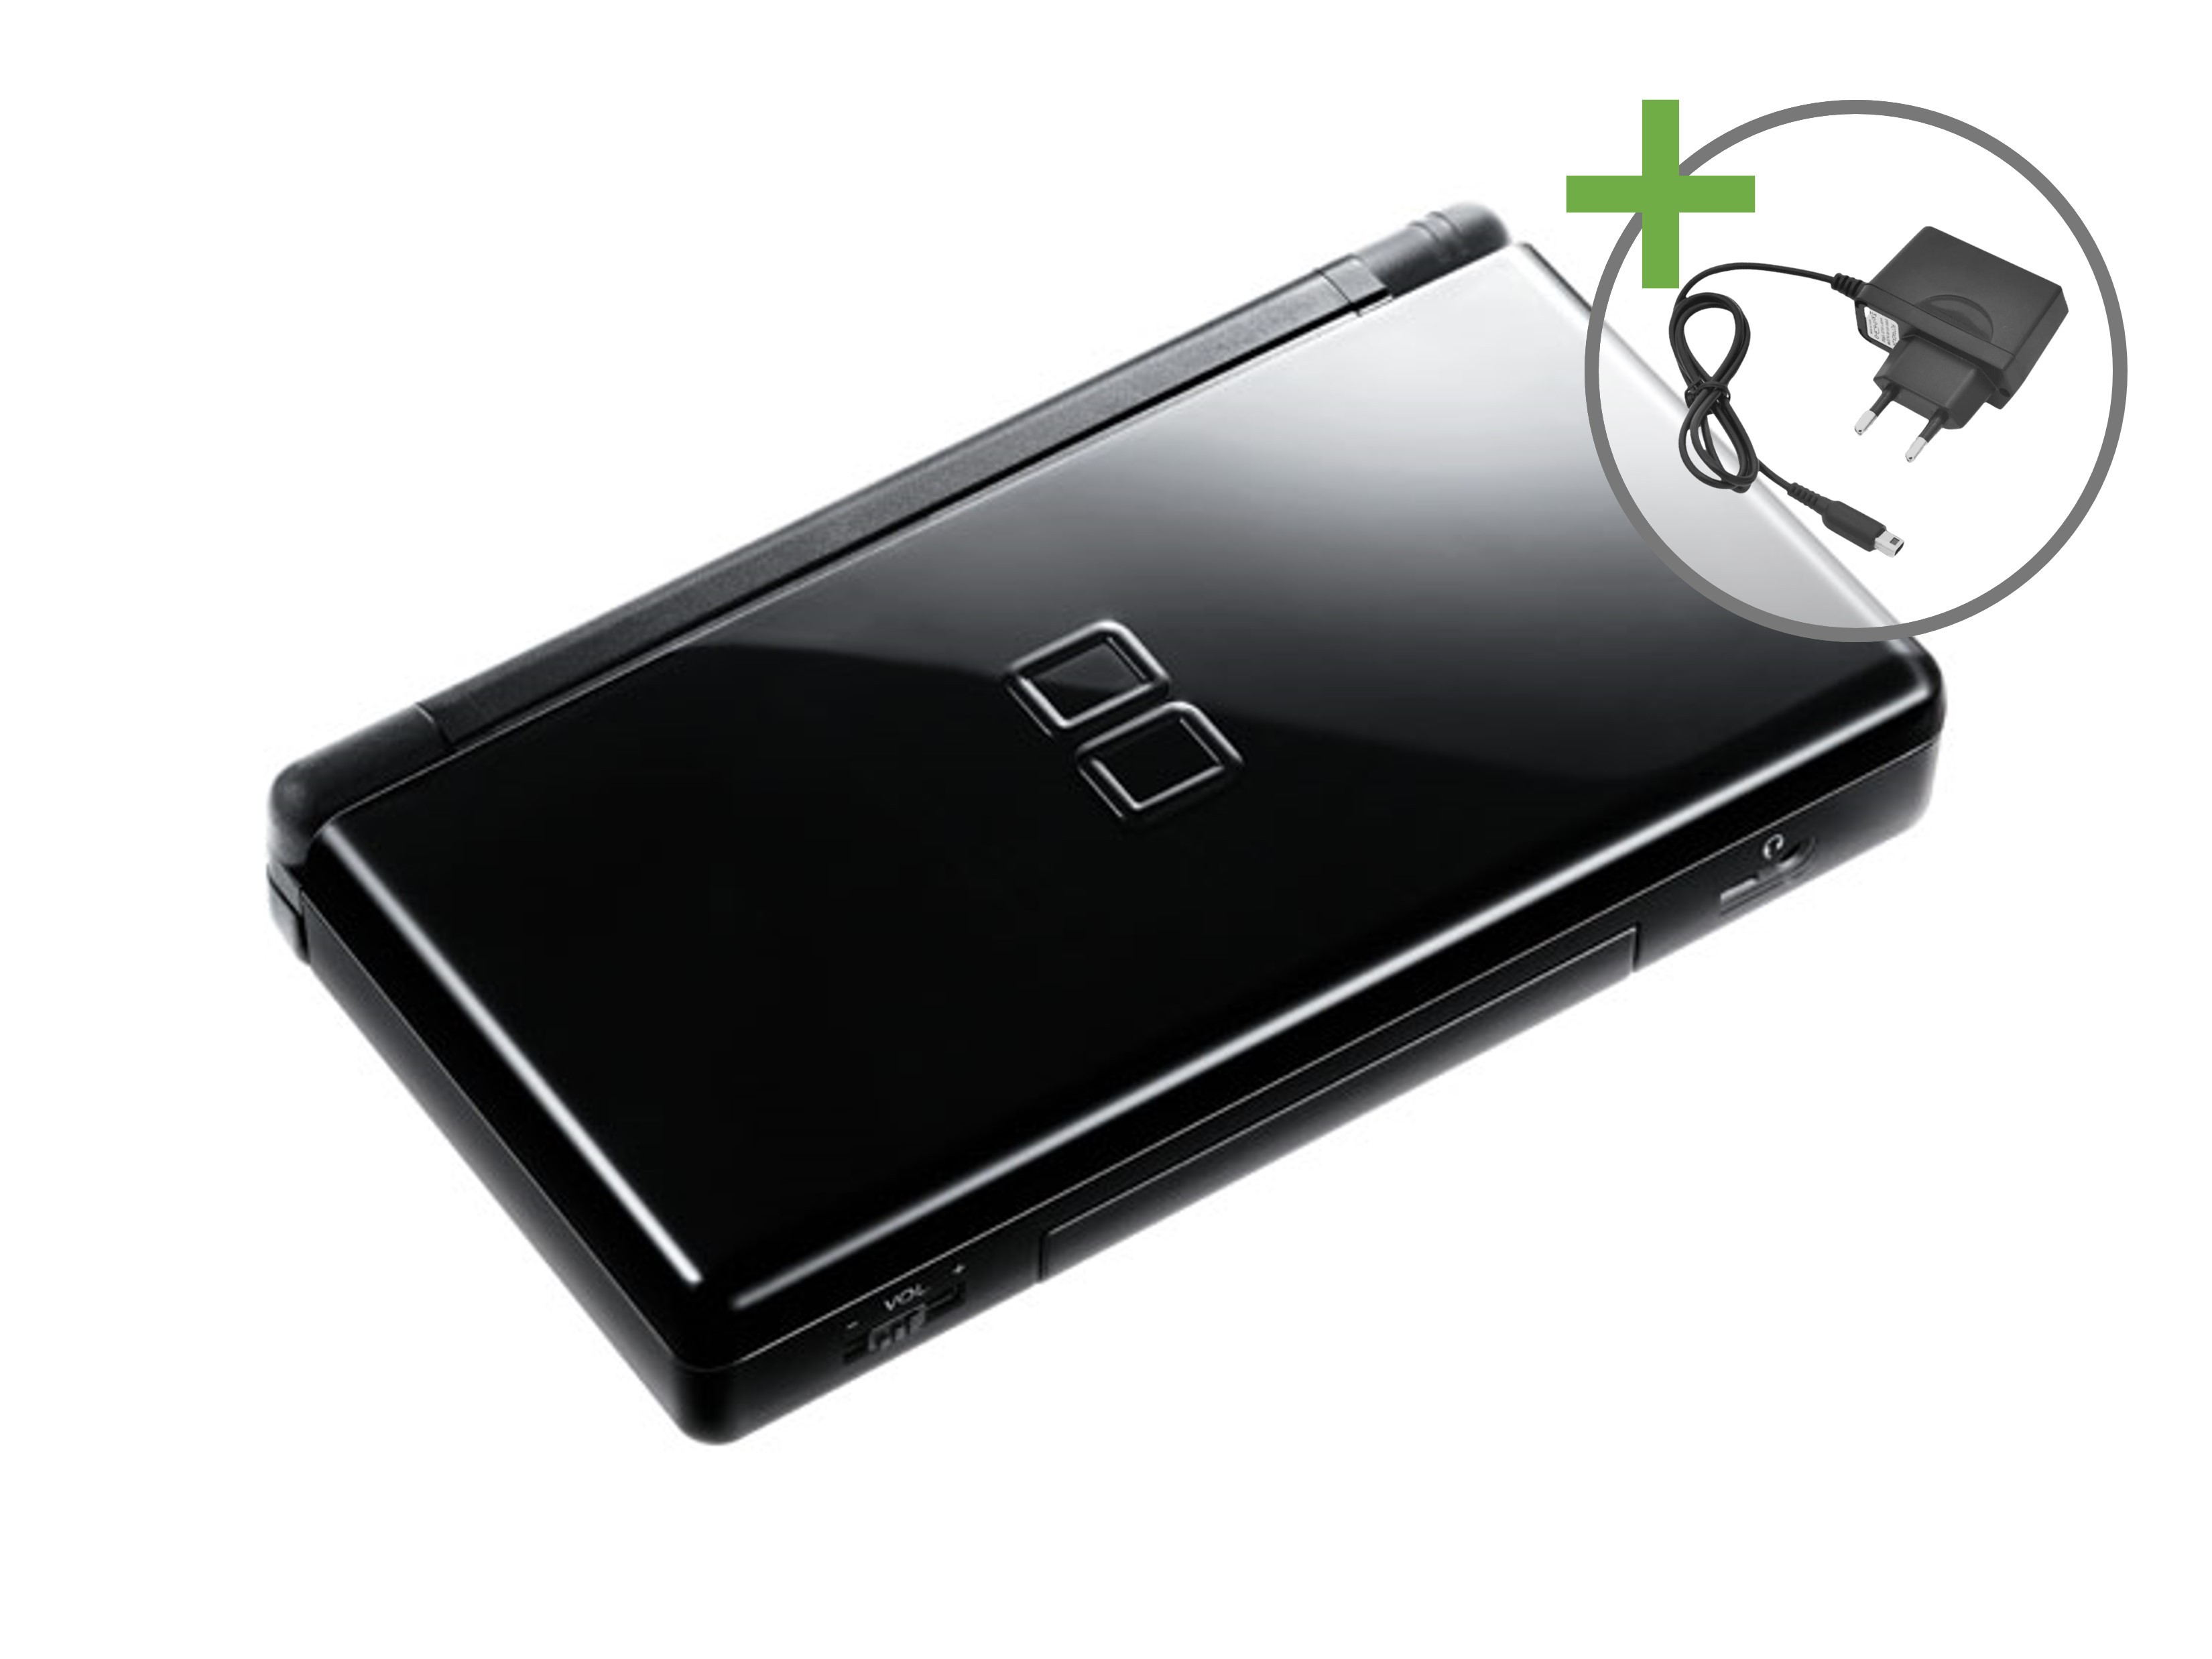 Nintendo DS Lite - Black (Cobalt) - Nintendo DS Hardware - 2